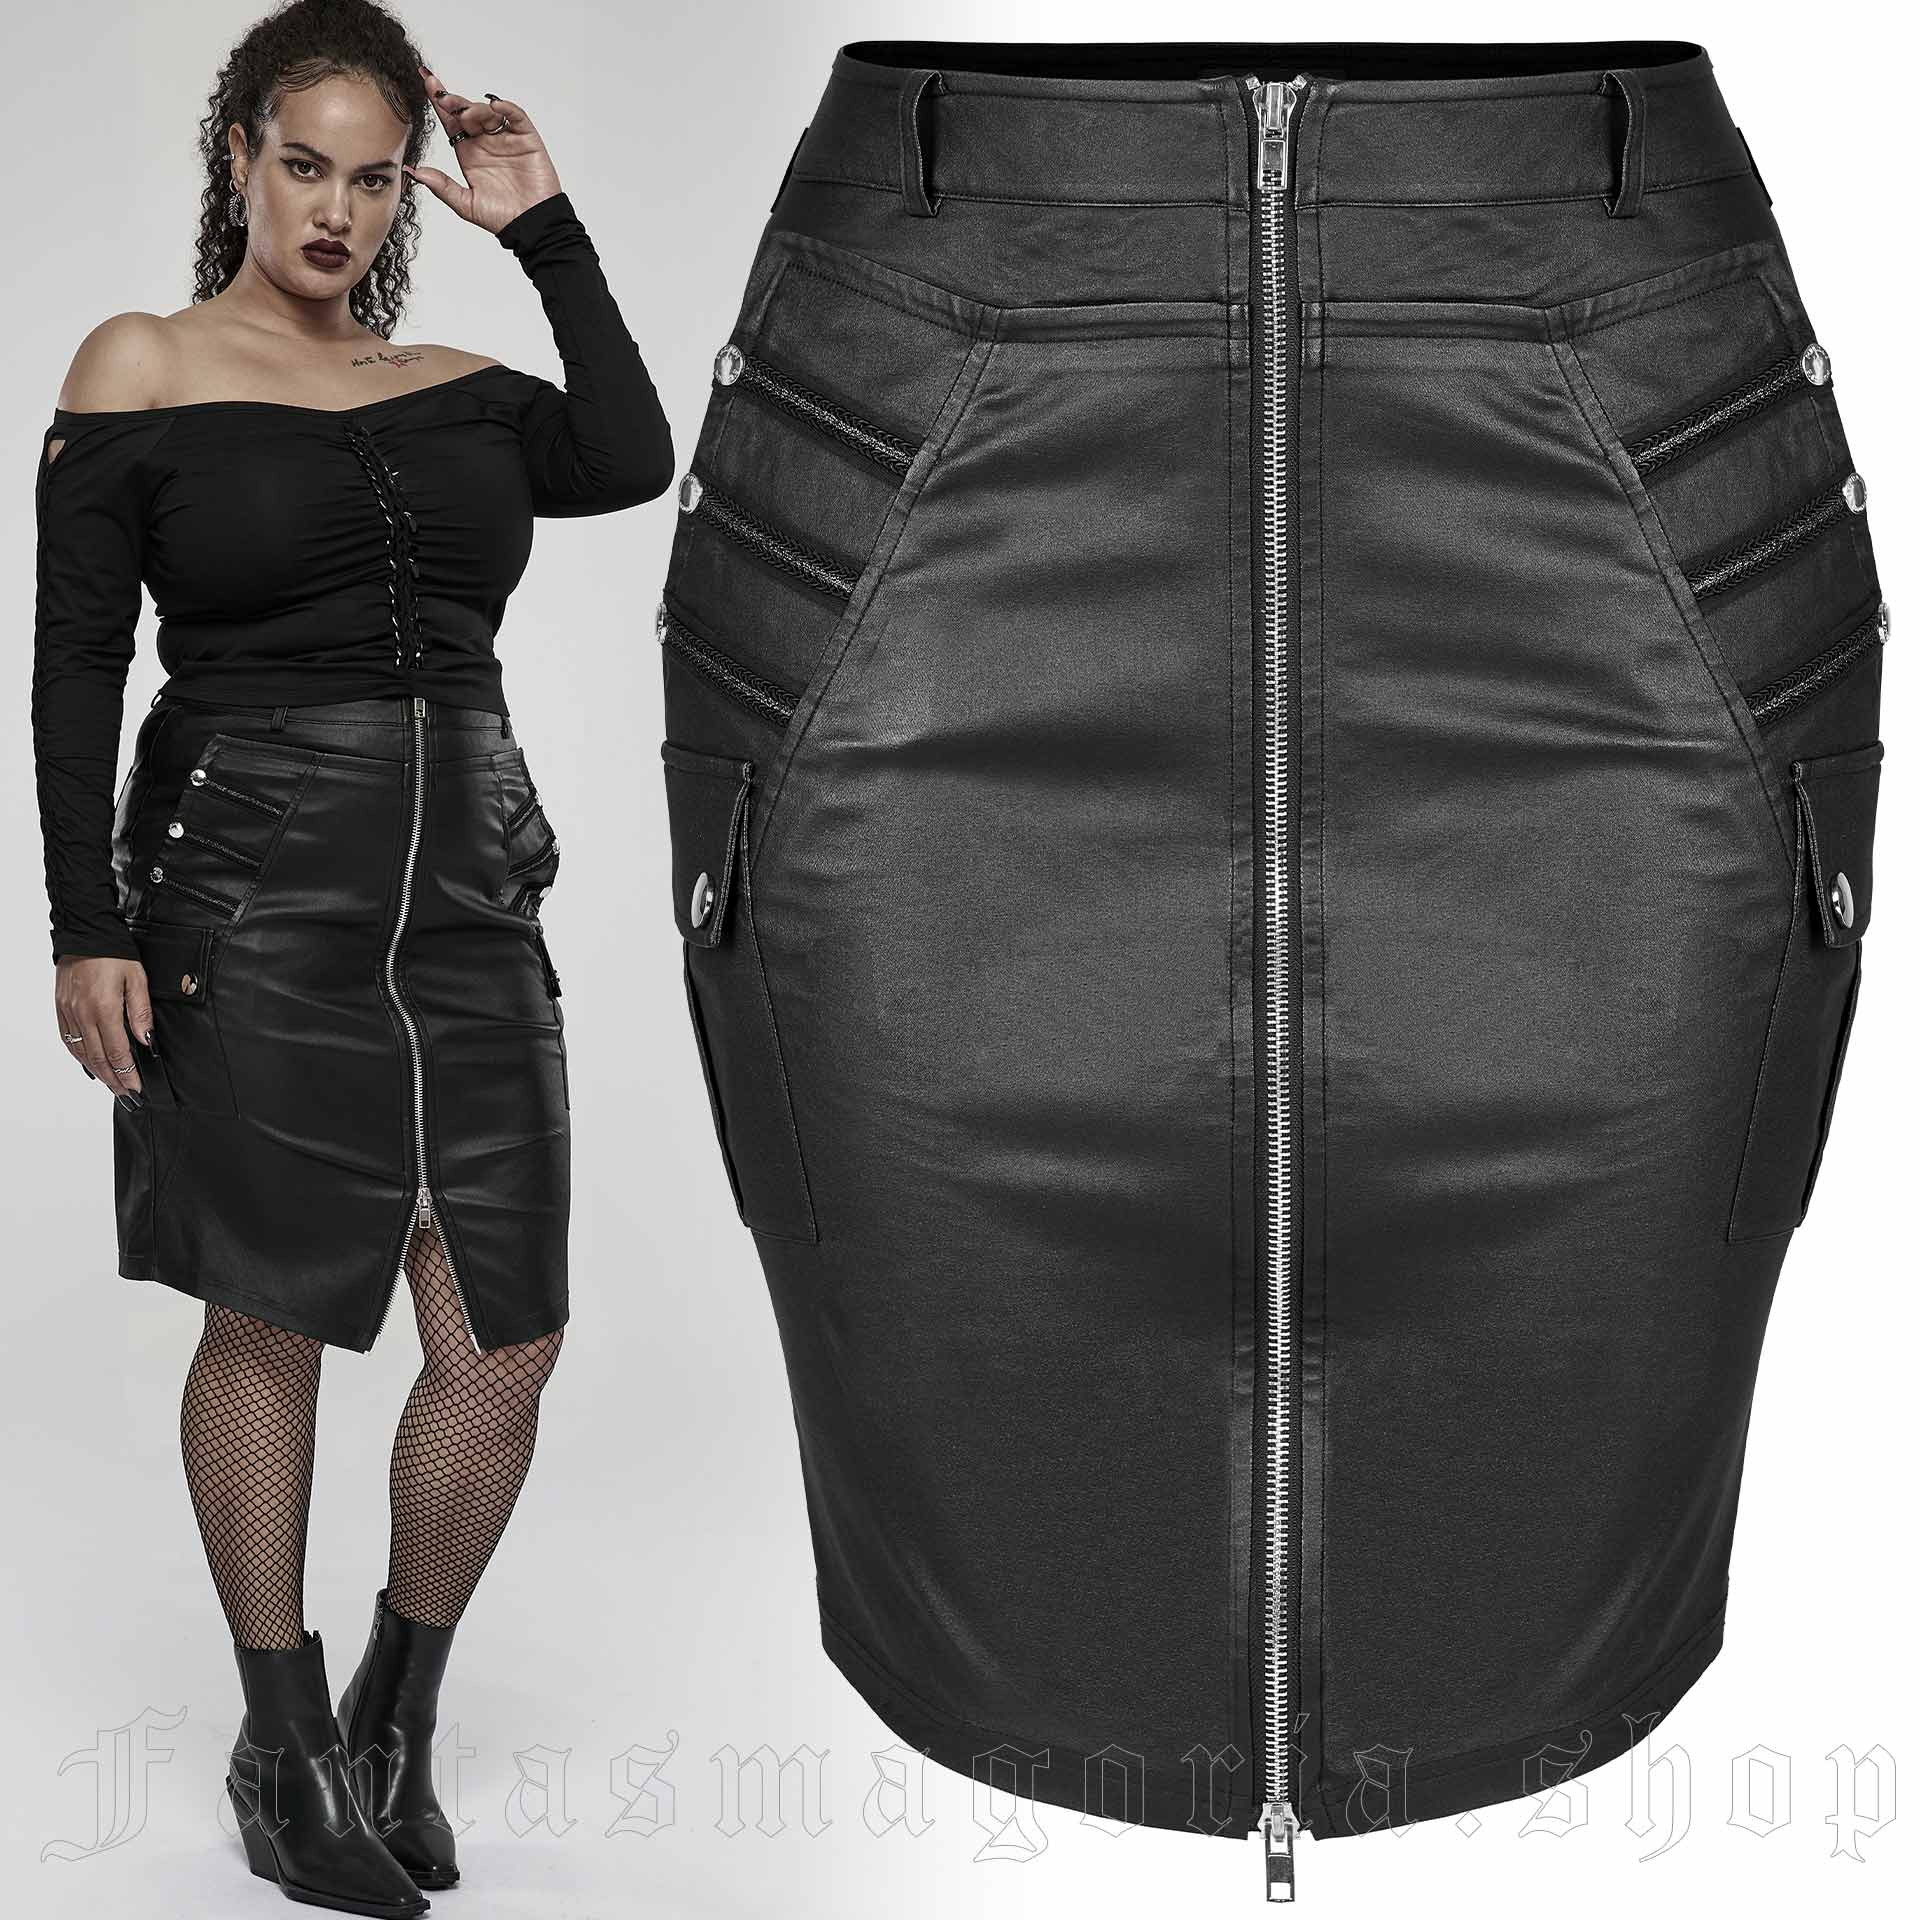 Vega Skirt - Punk Rave - DQ-591 1